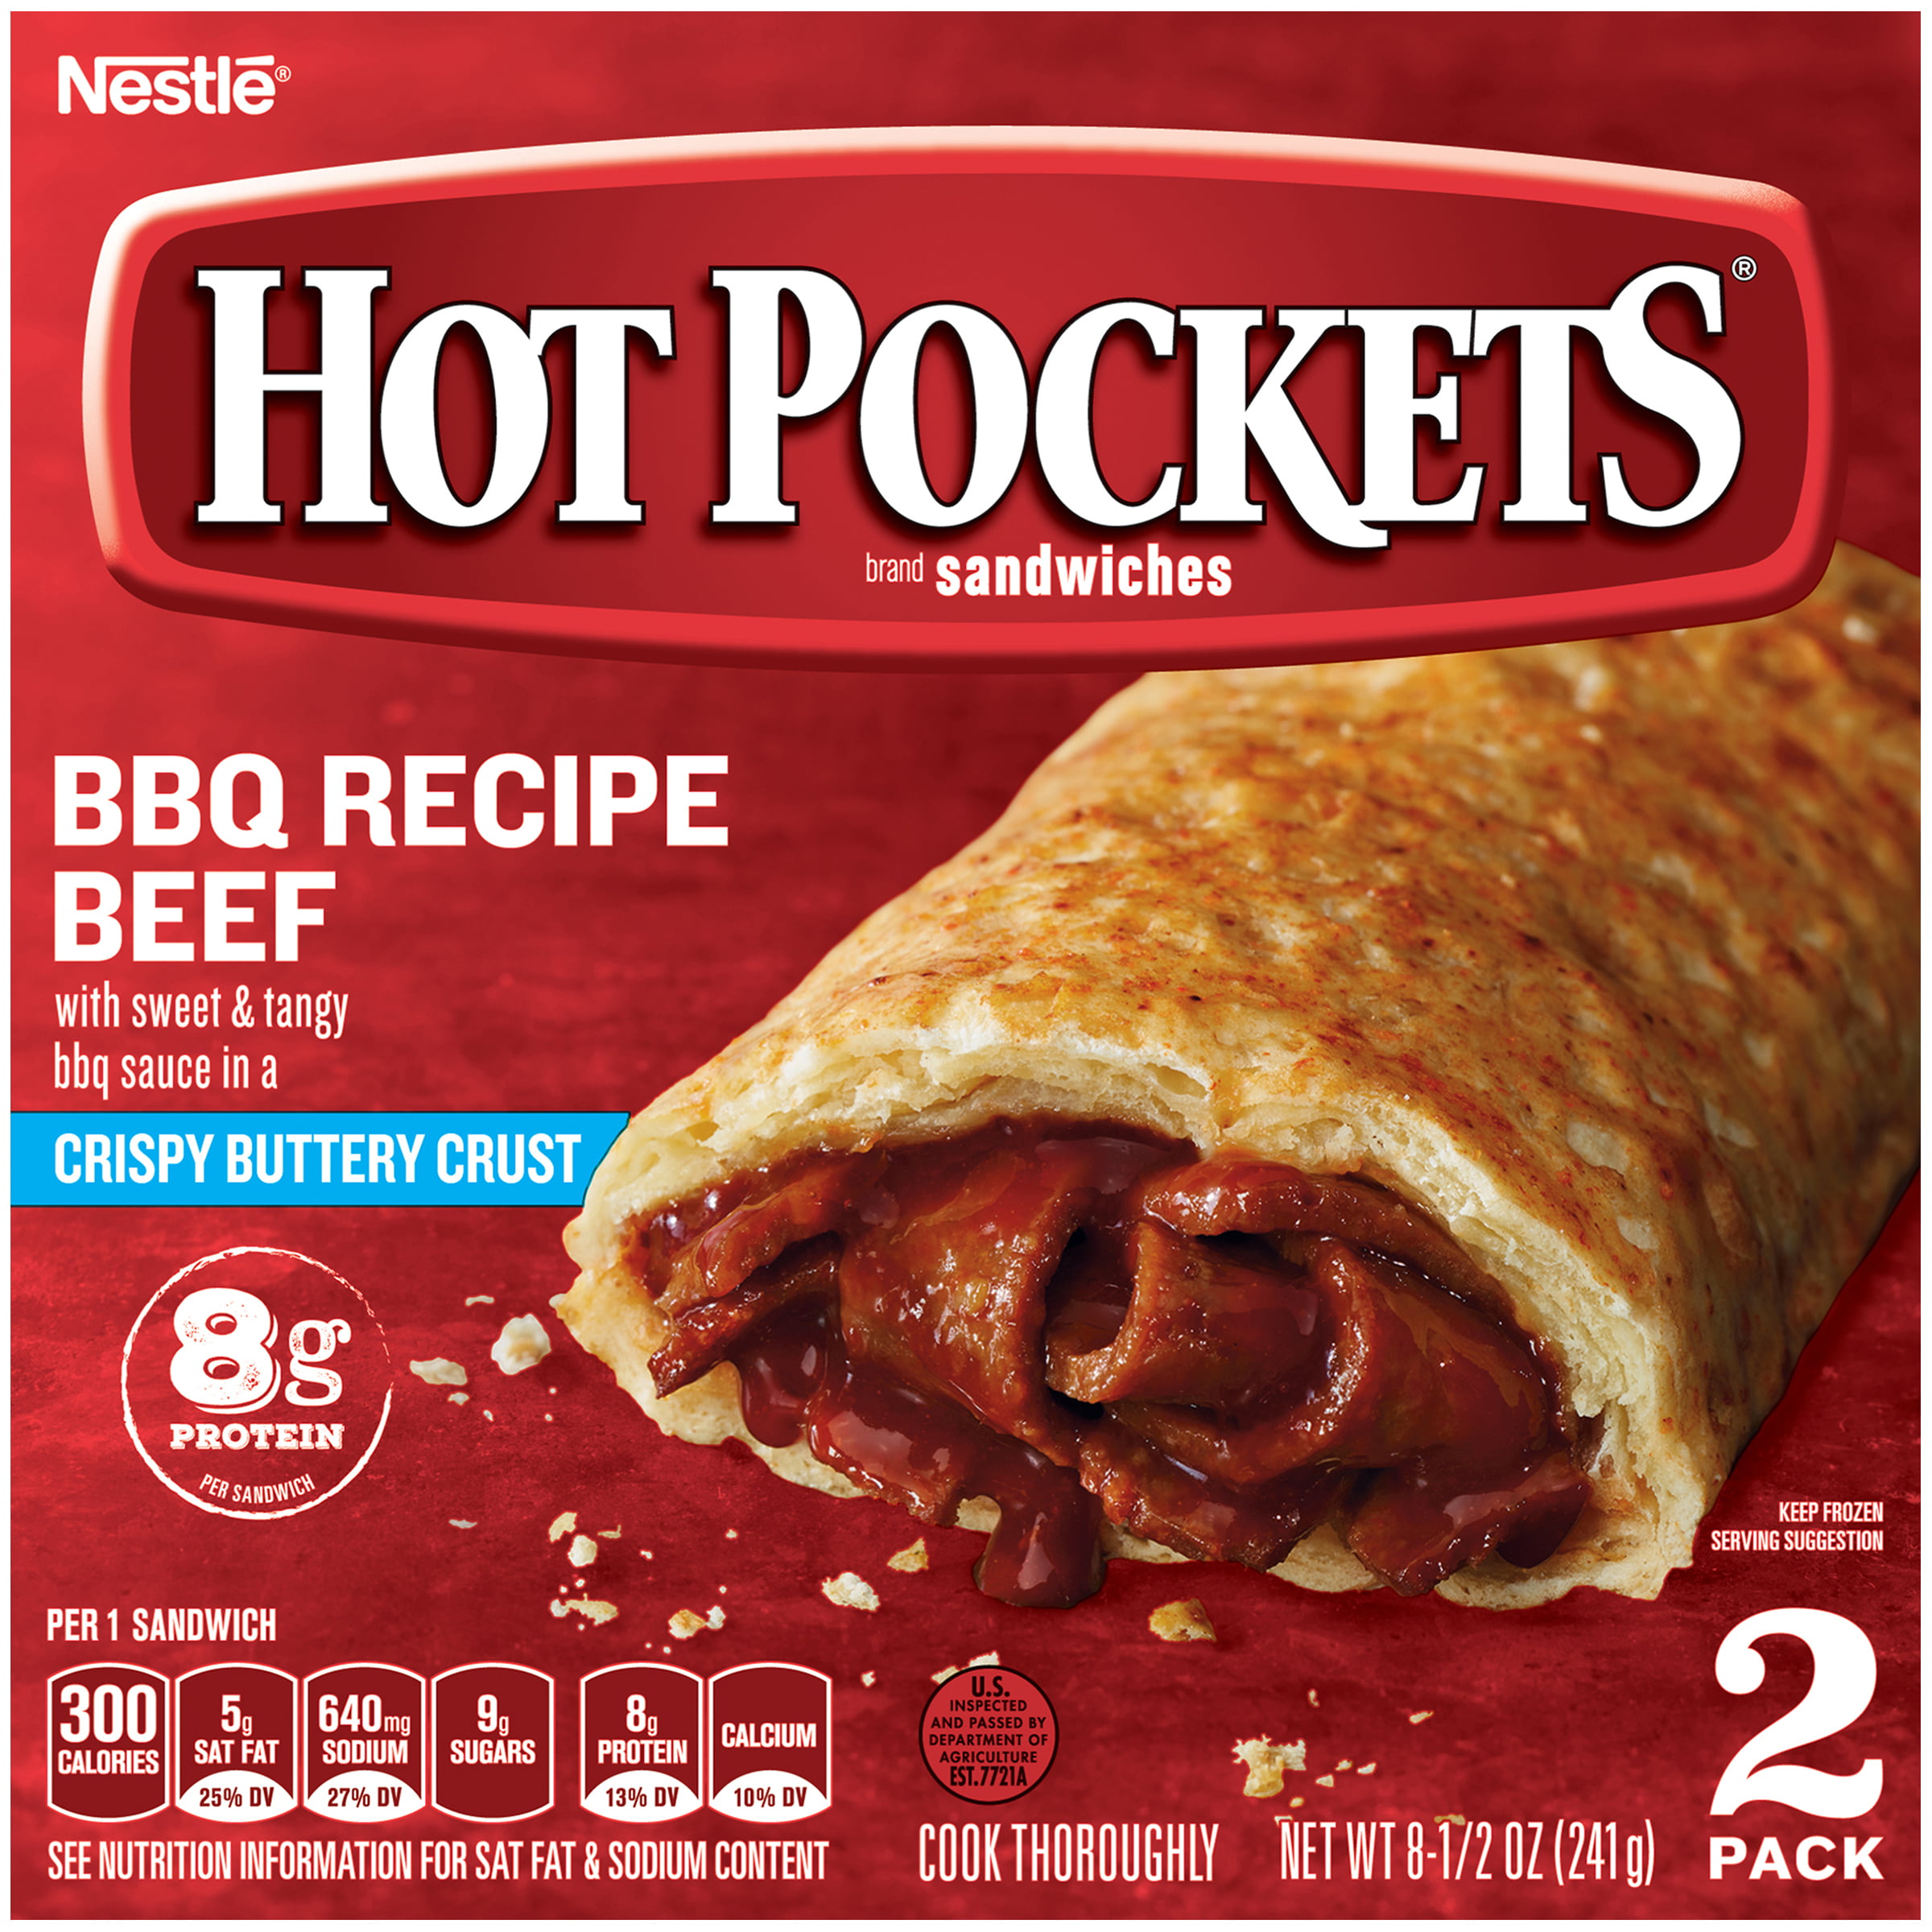 HOT POCKETS BBQ Recipe Beef Frozen Sandwiches 2 Ct. 